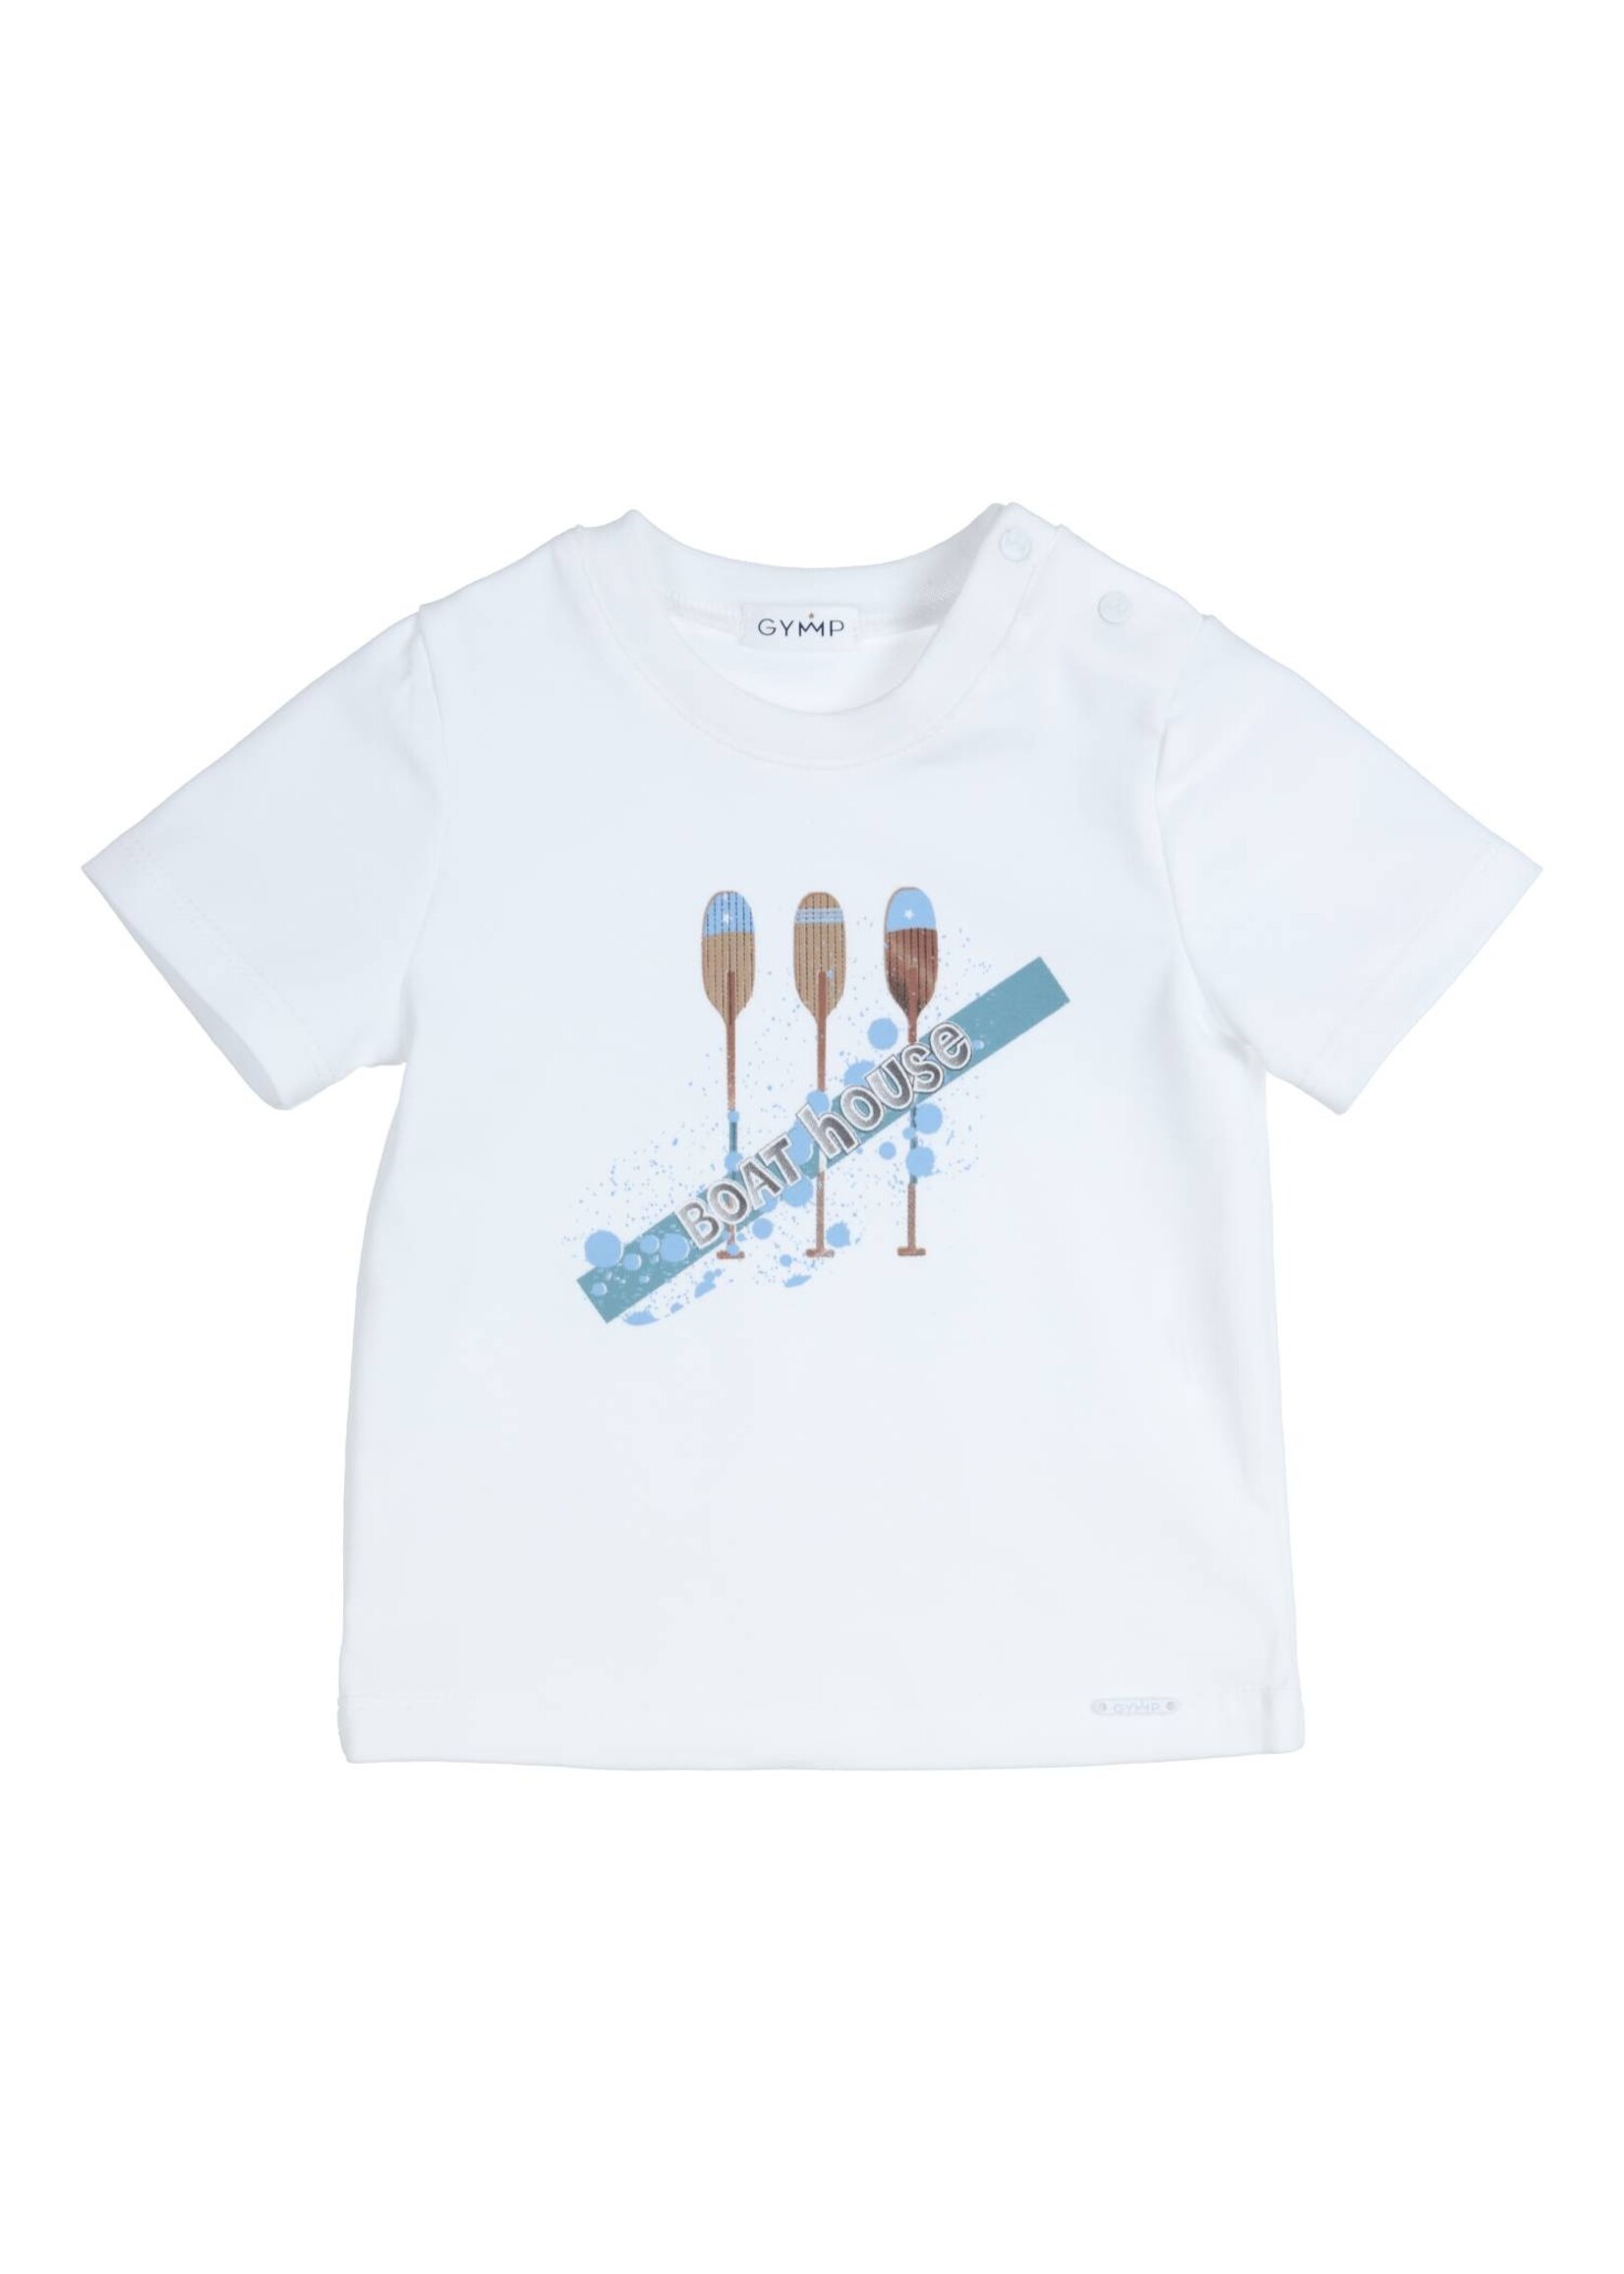 Gymp Boys T-shirt Aerobic Boat house 353-4436-20 White